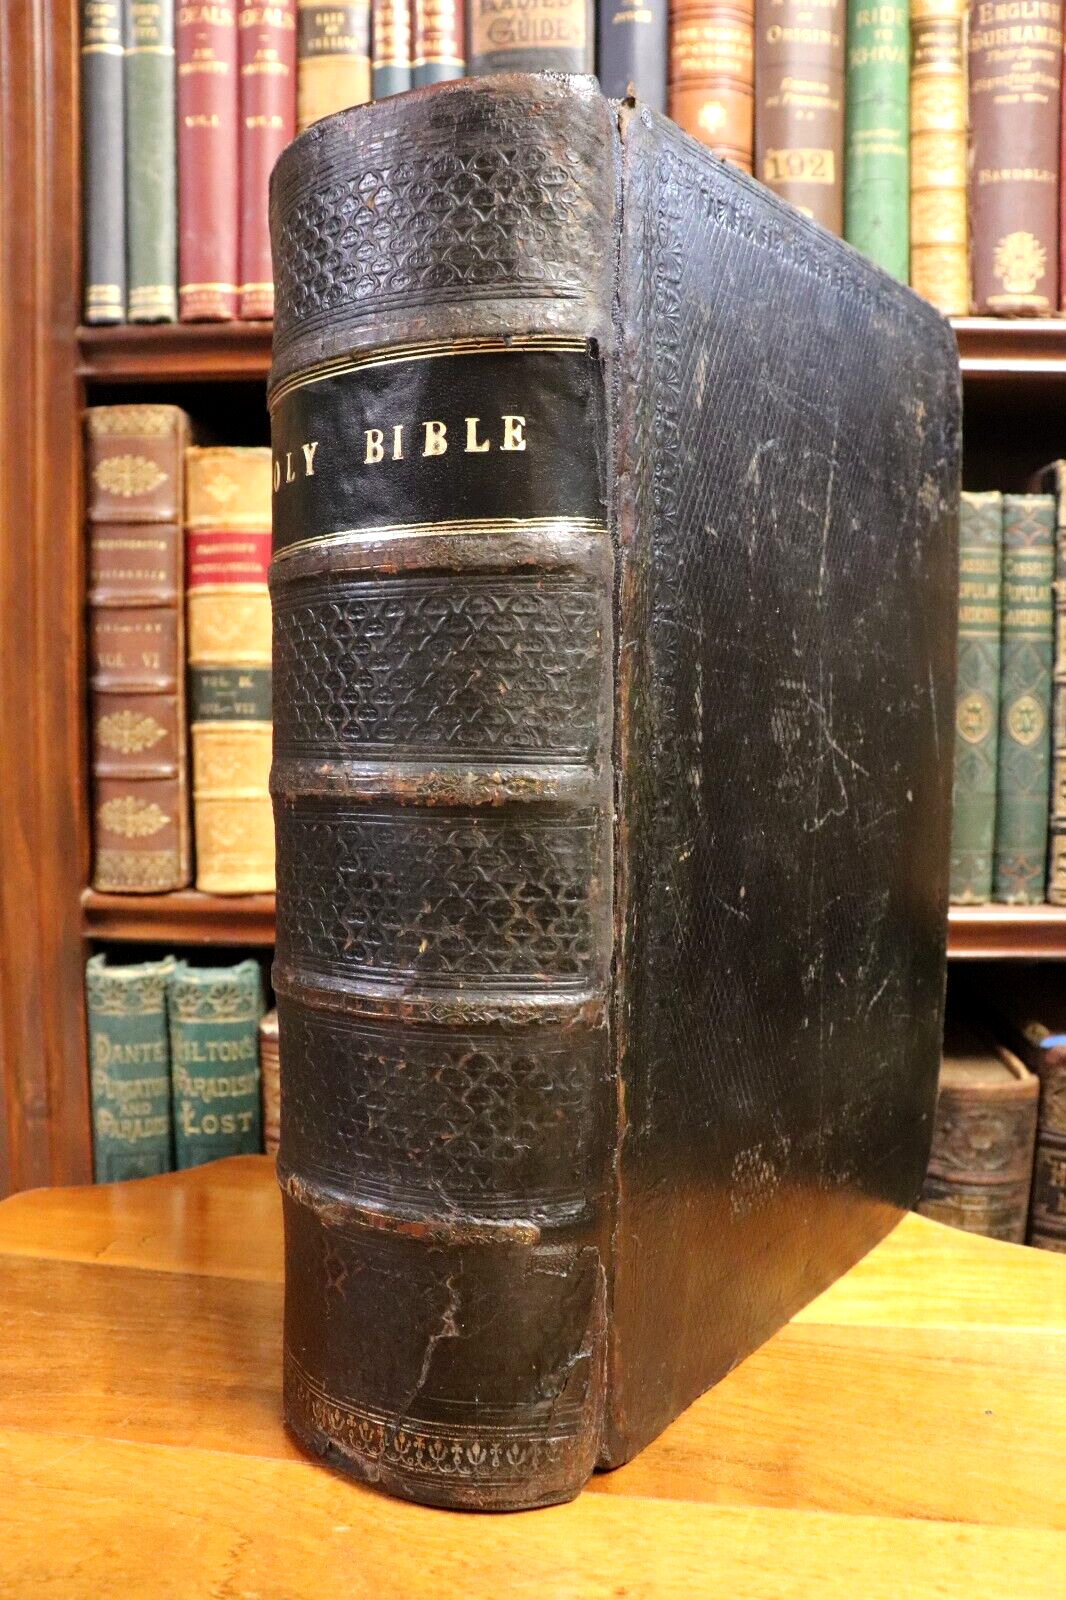 The Comprehensive Family Bible: D Davidson - c1890 - Antique Religious Book